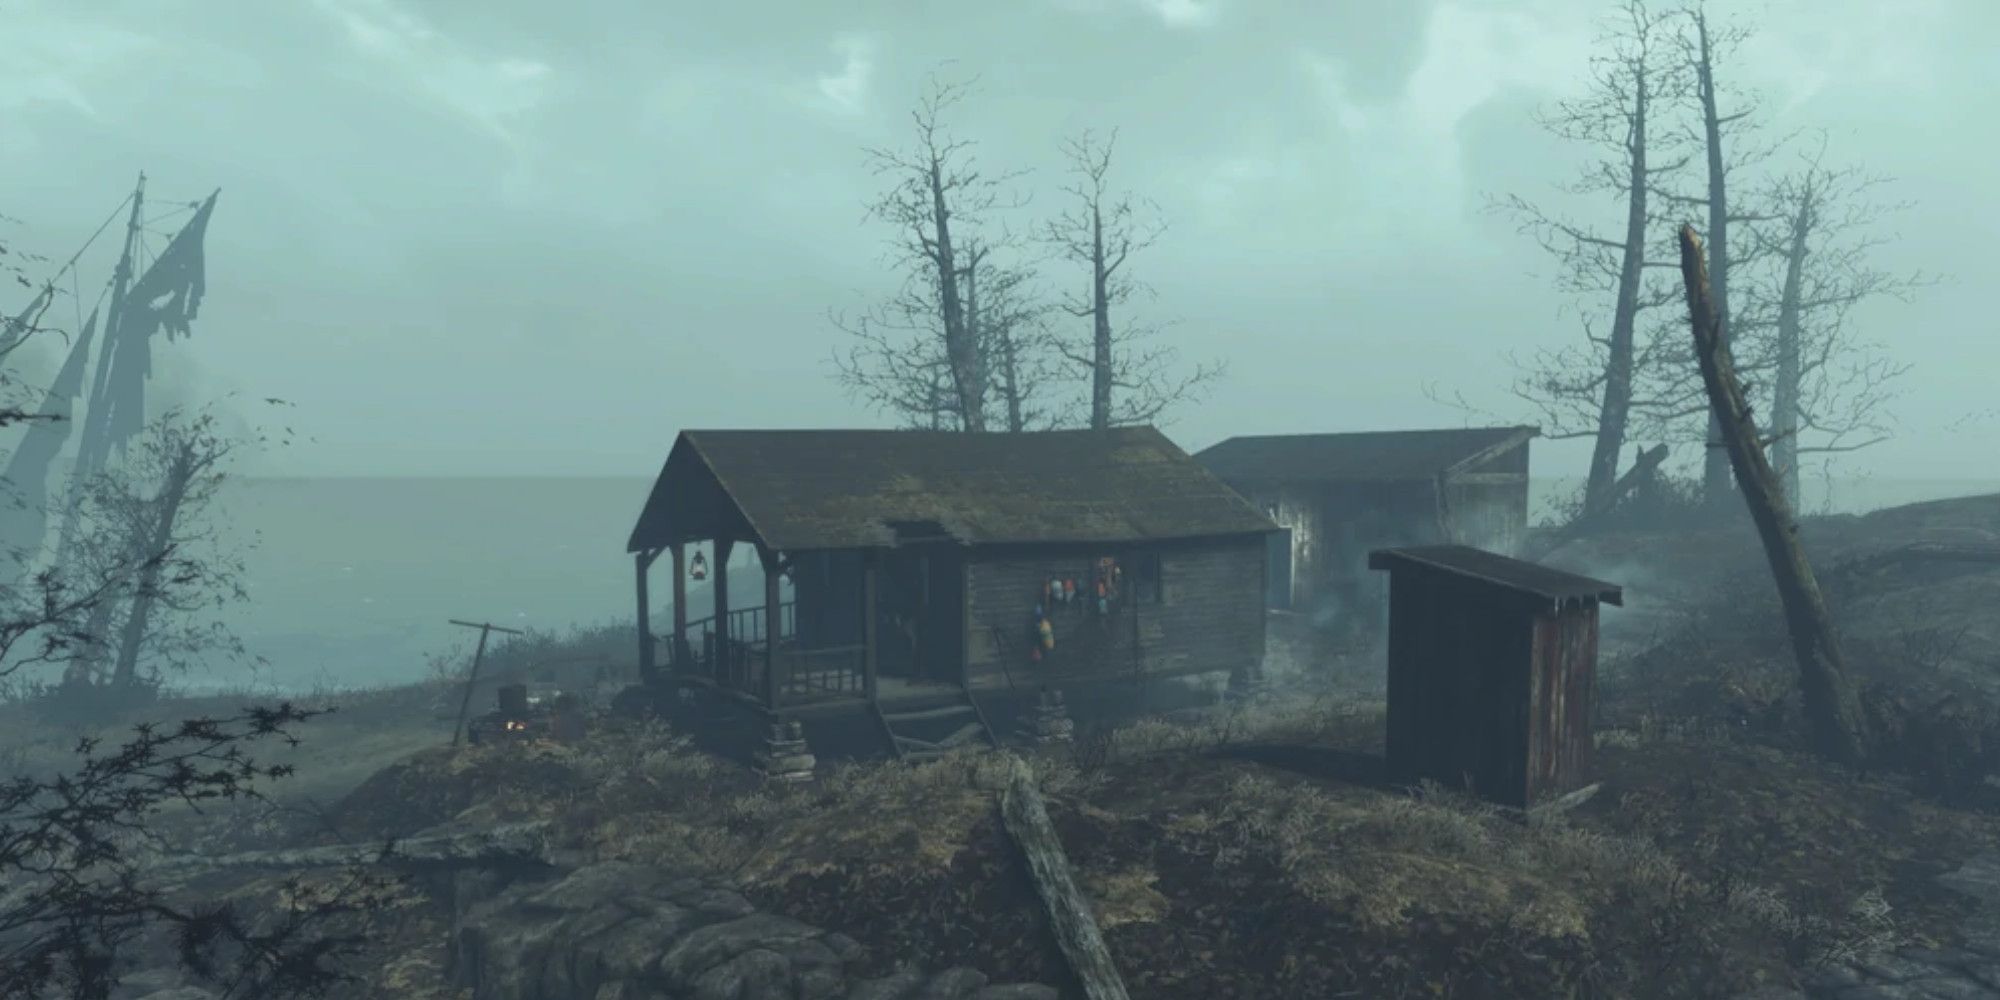 A cabin on a foggy island